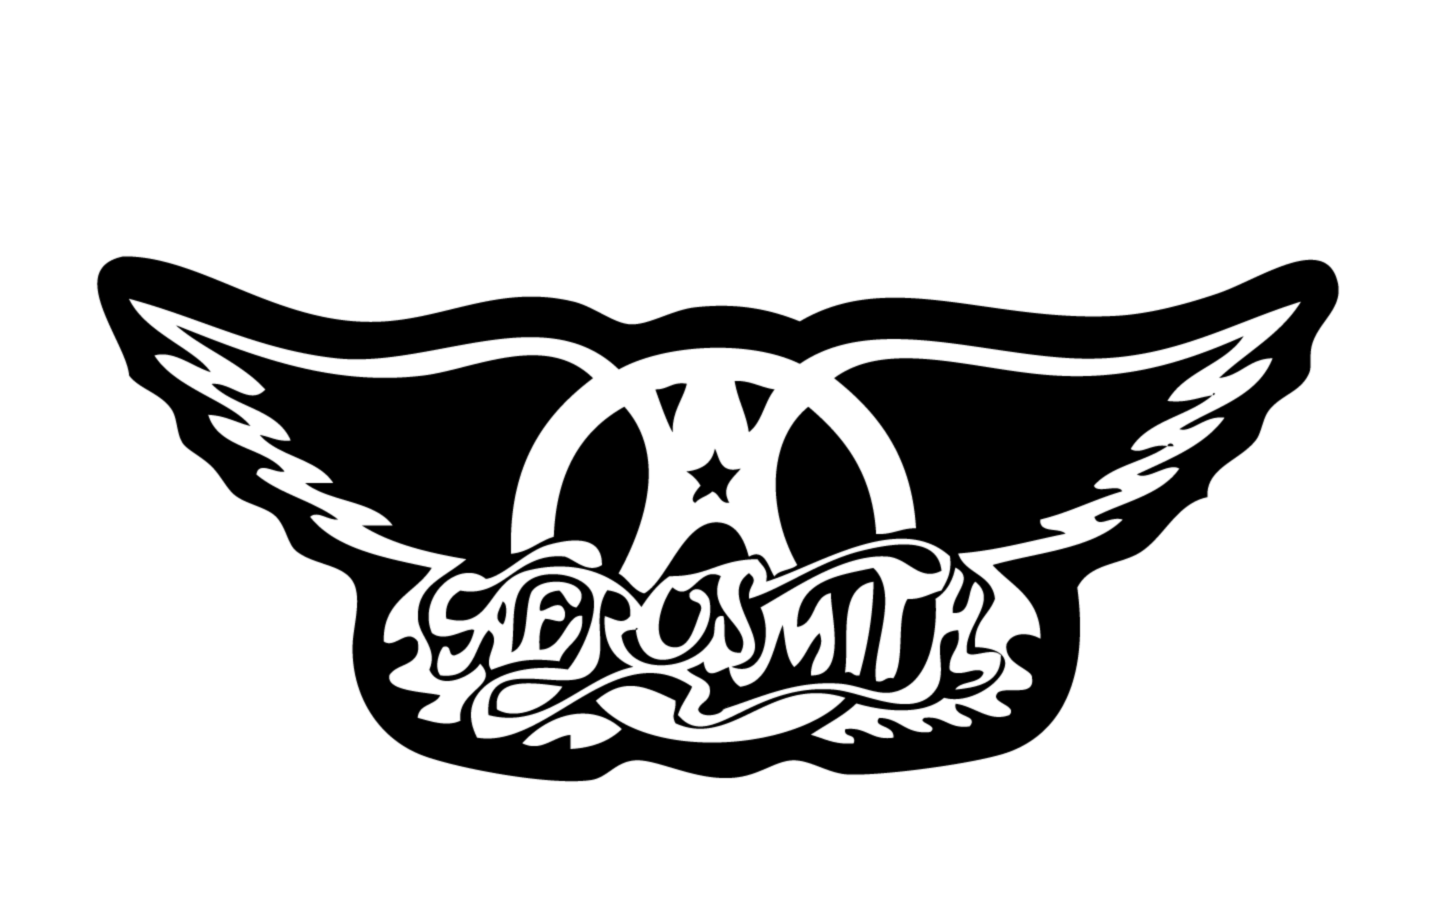 Aerosmith Store